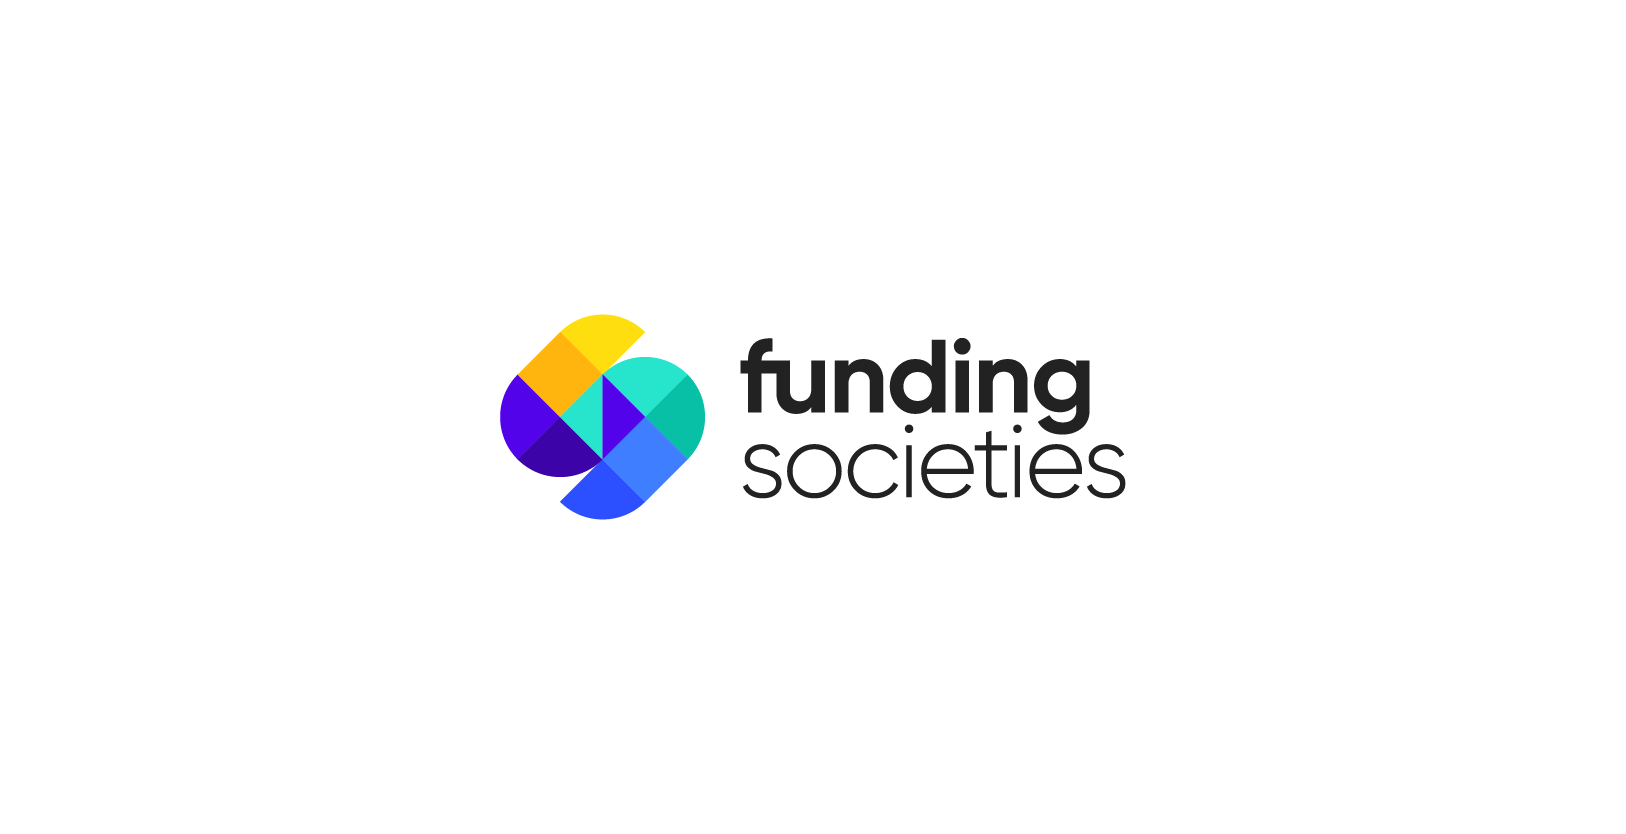 VisionFund Portfolio Company Funding Societies's Logo